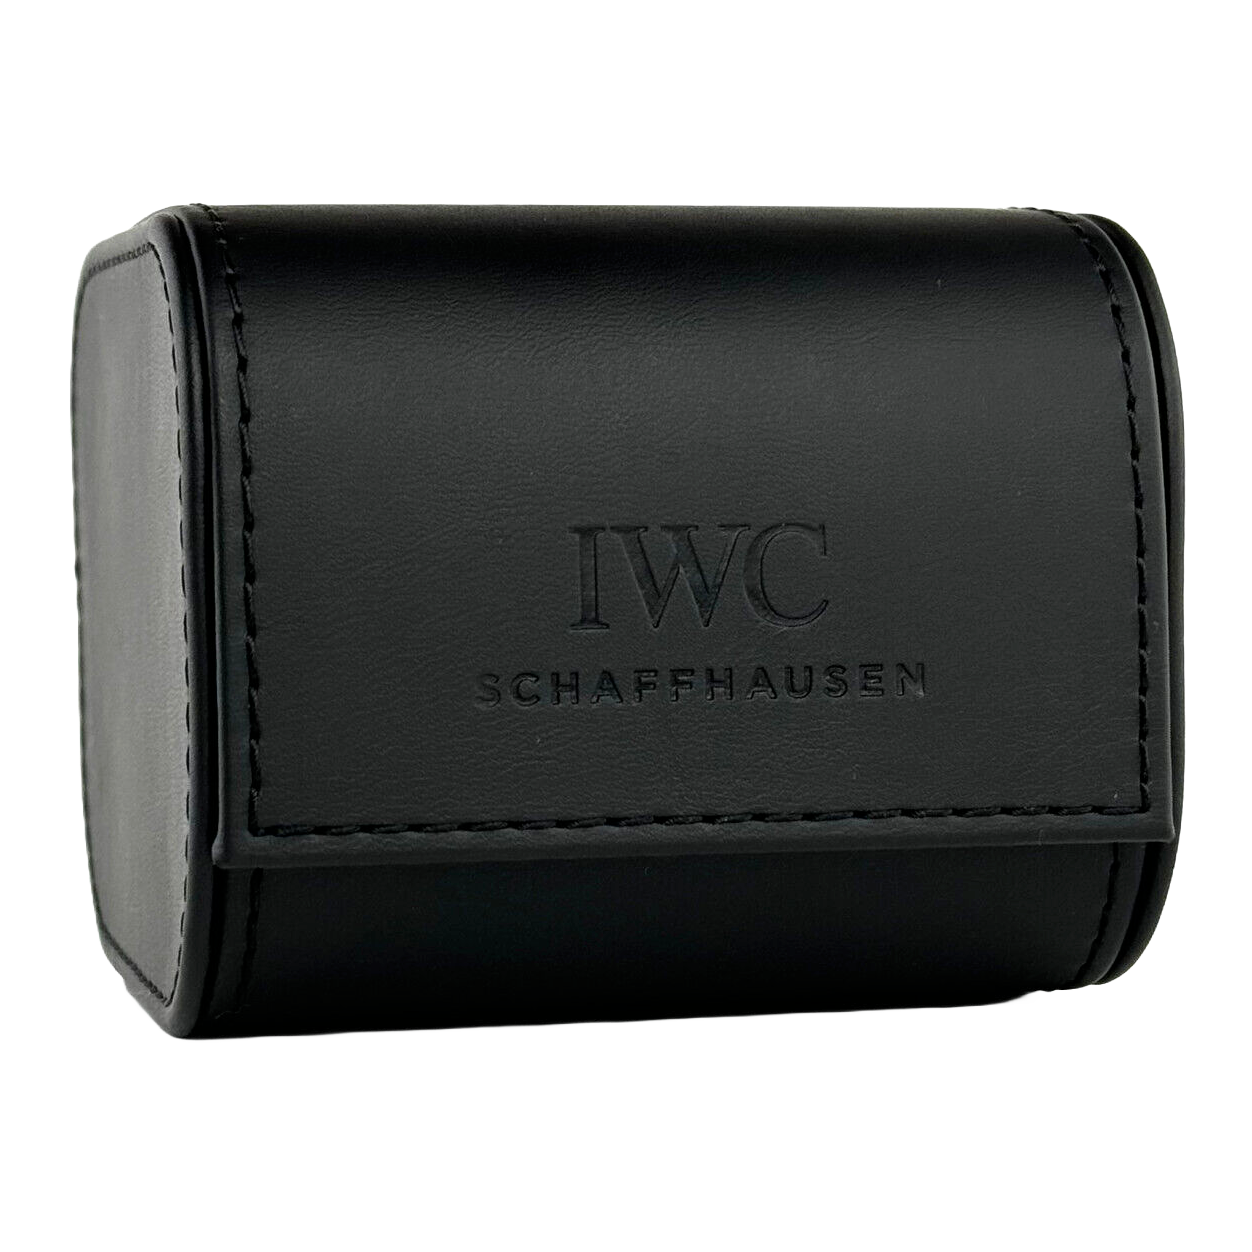 IWC Travel Case Pouch Service Etui Reiseetui Reisebox Box Uhrenetui Leder Leather Watch case